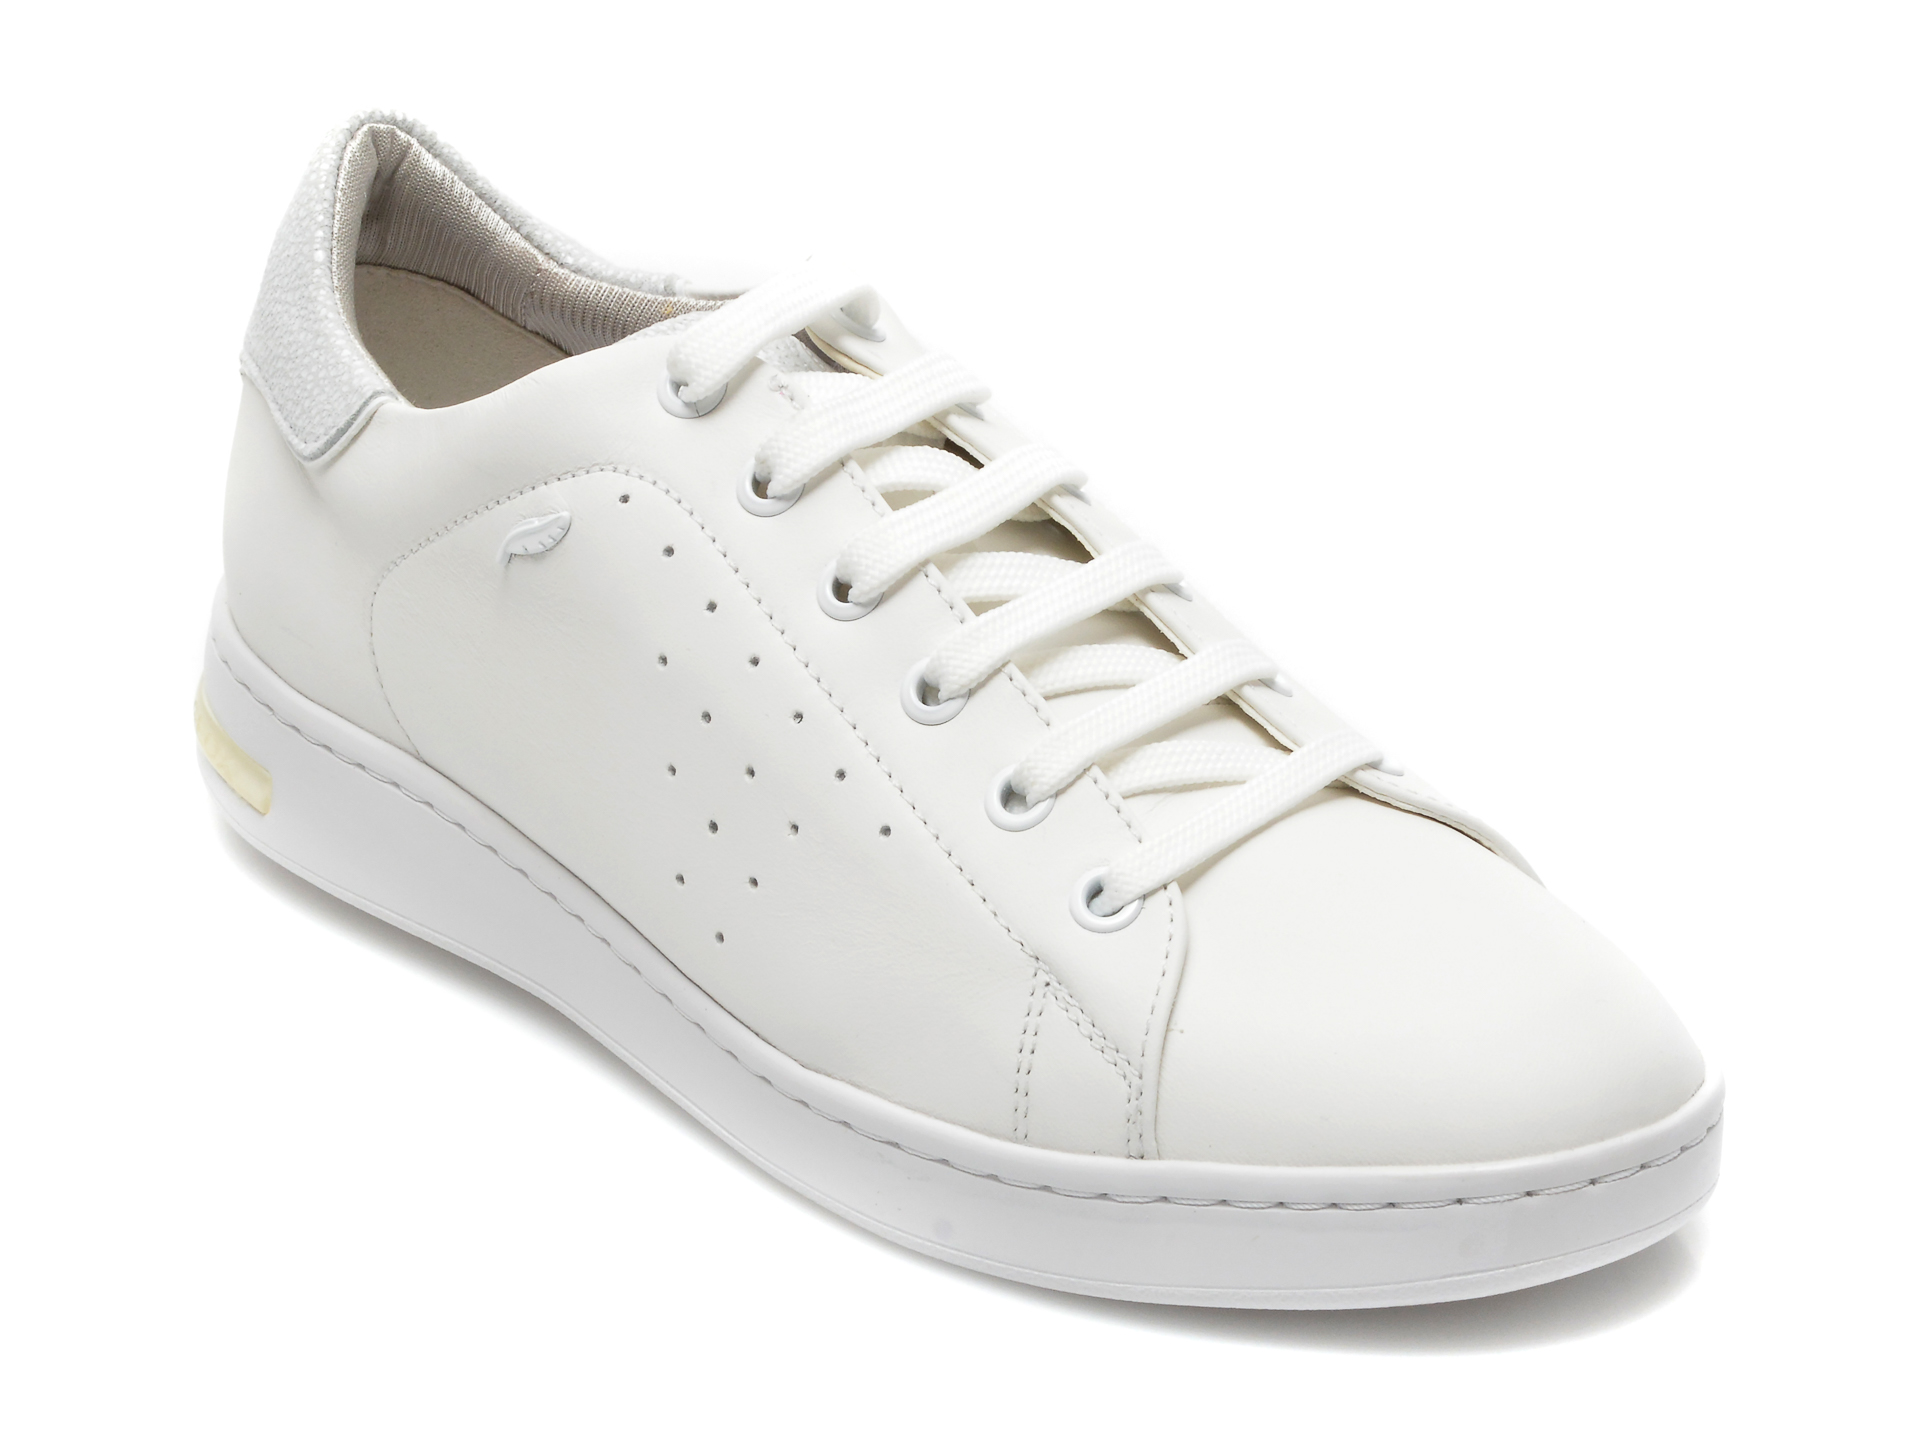 Pantofi sport GEOX albi, D621BA, din piele naturala Geox